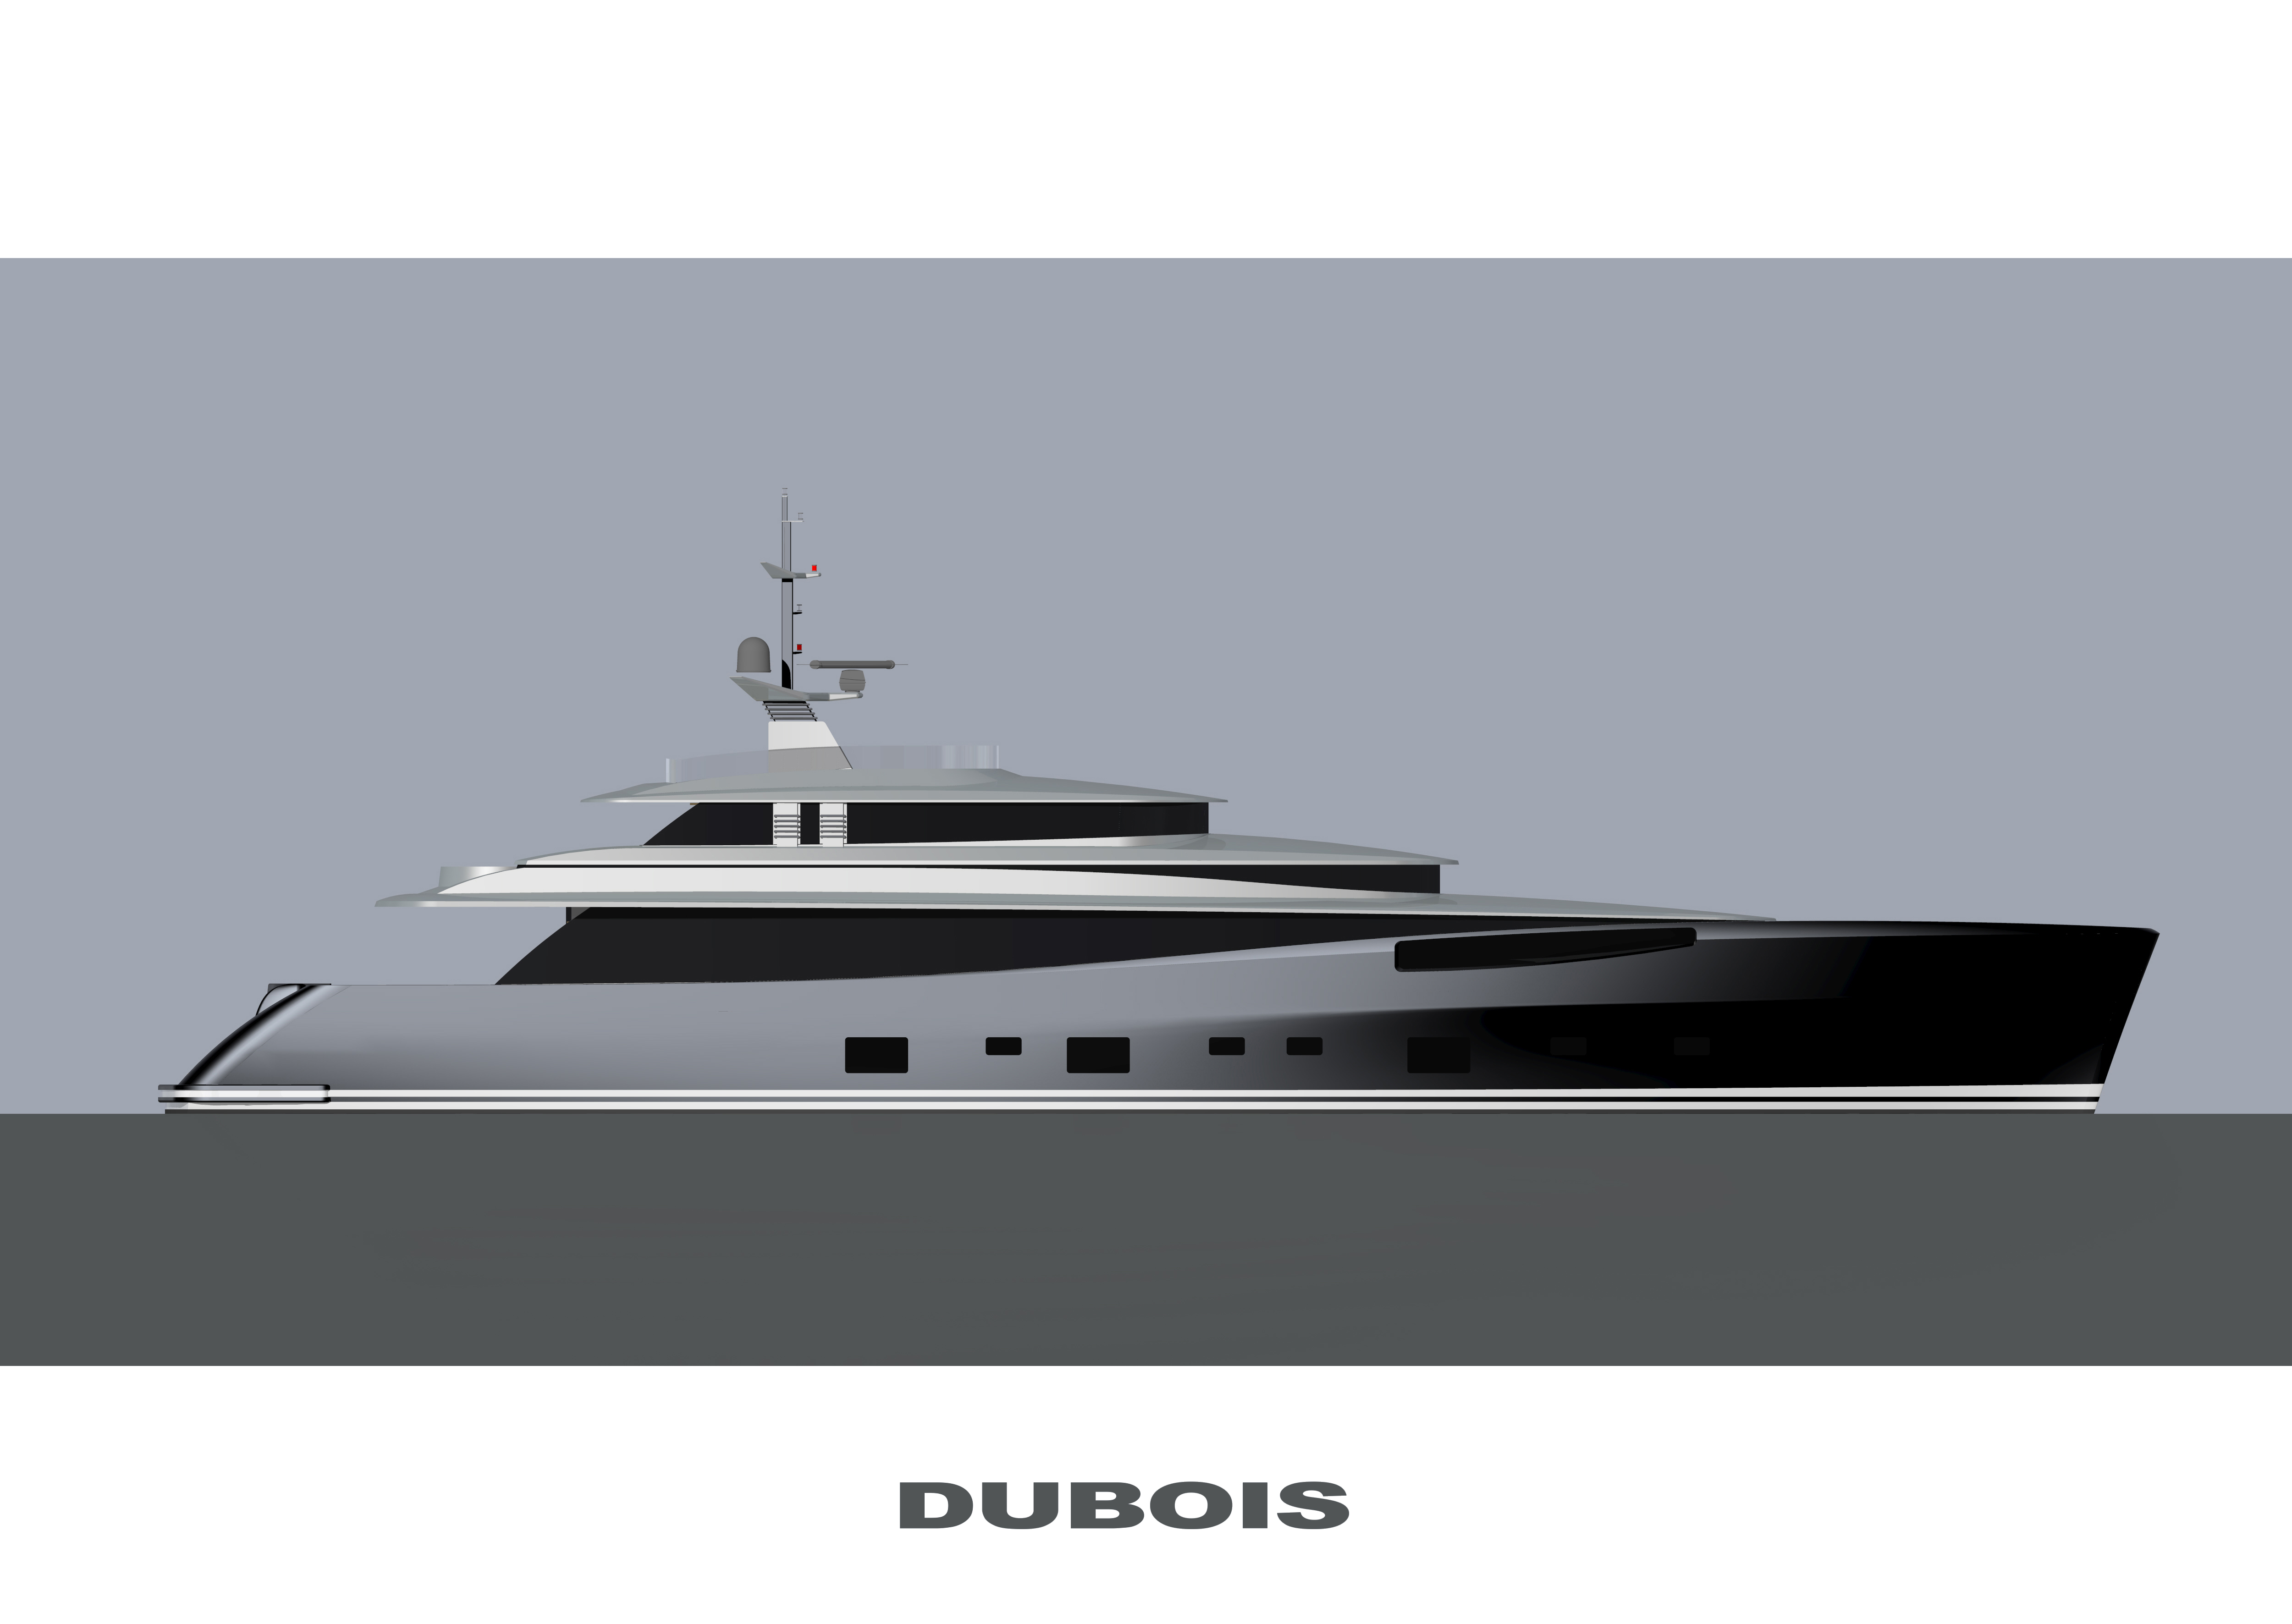 ed dubois yachts